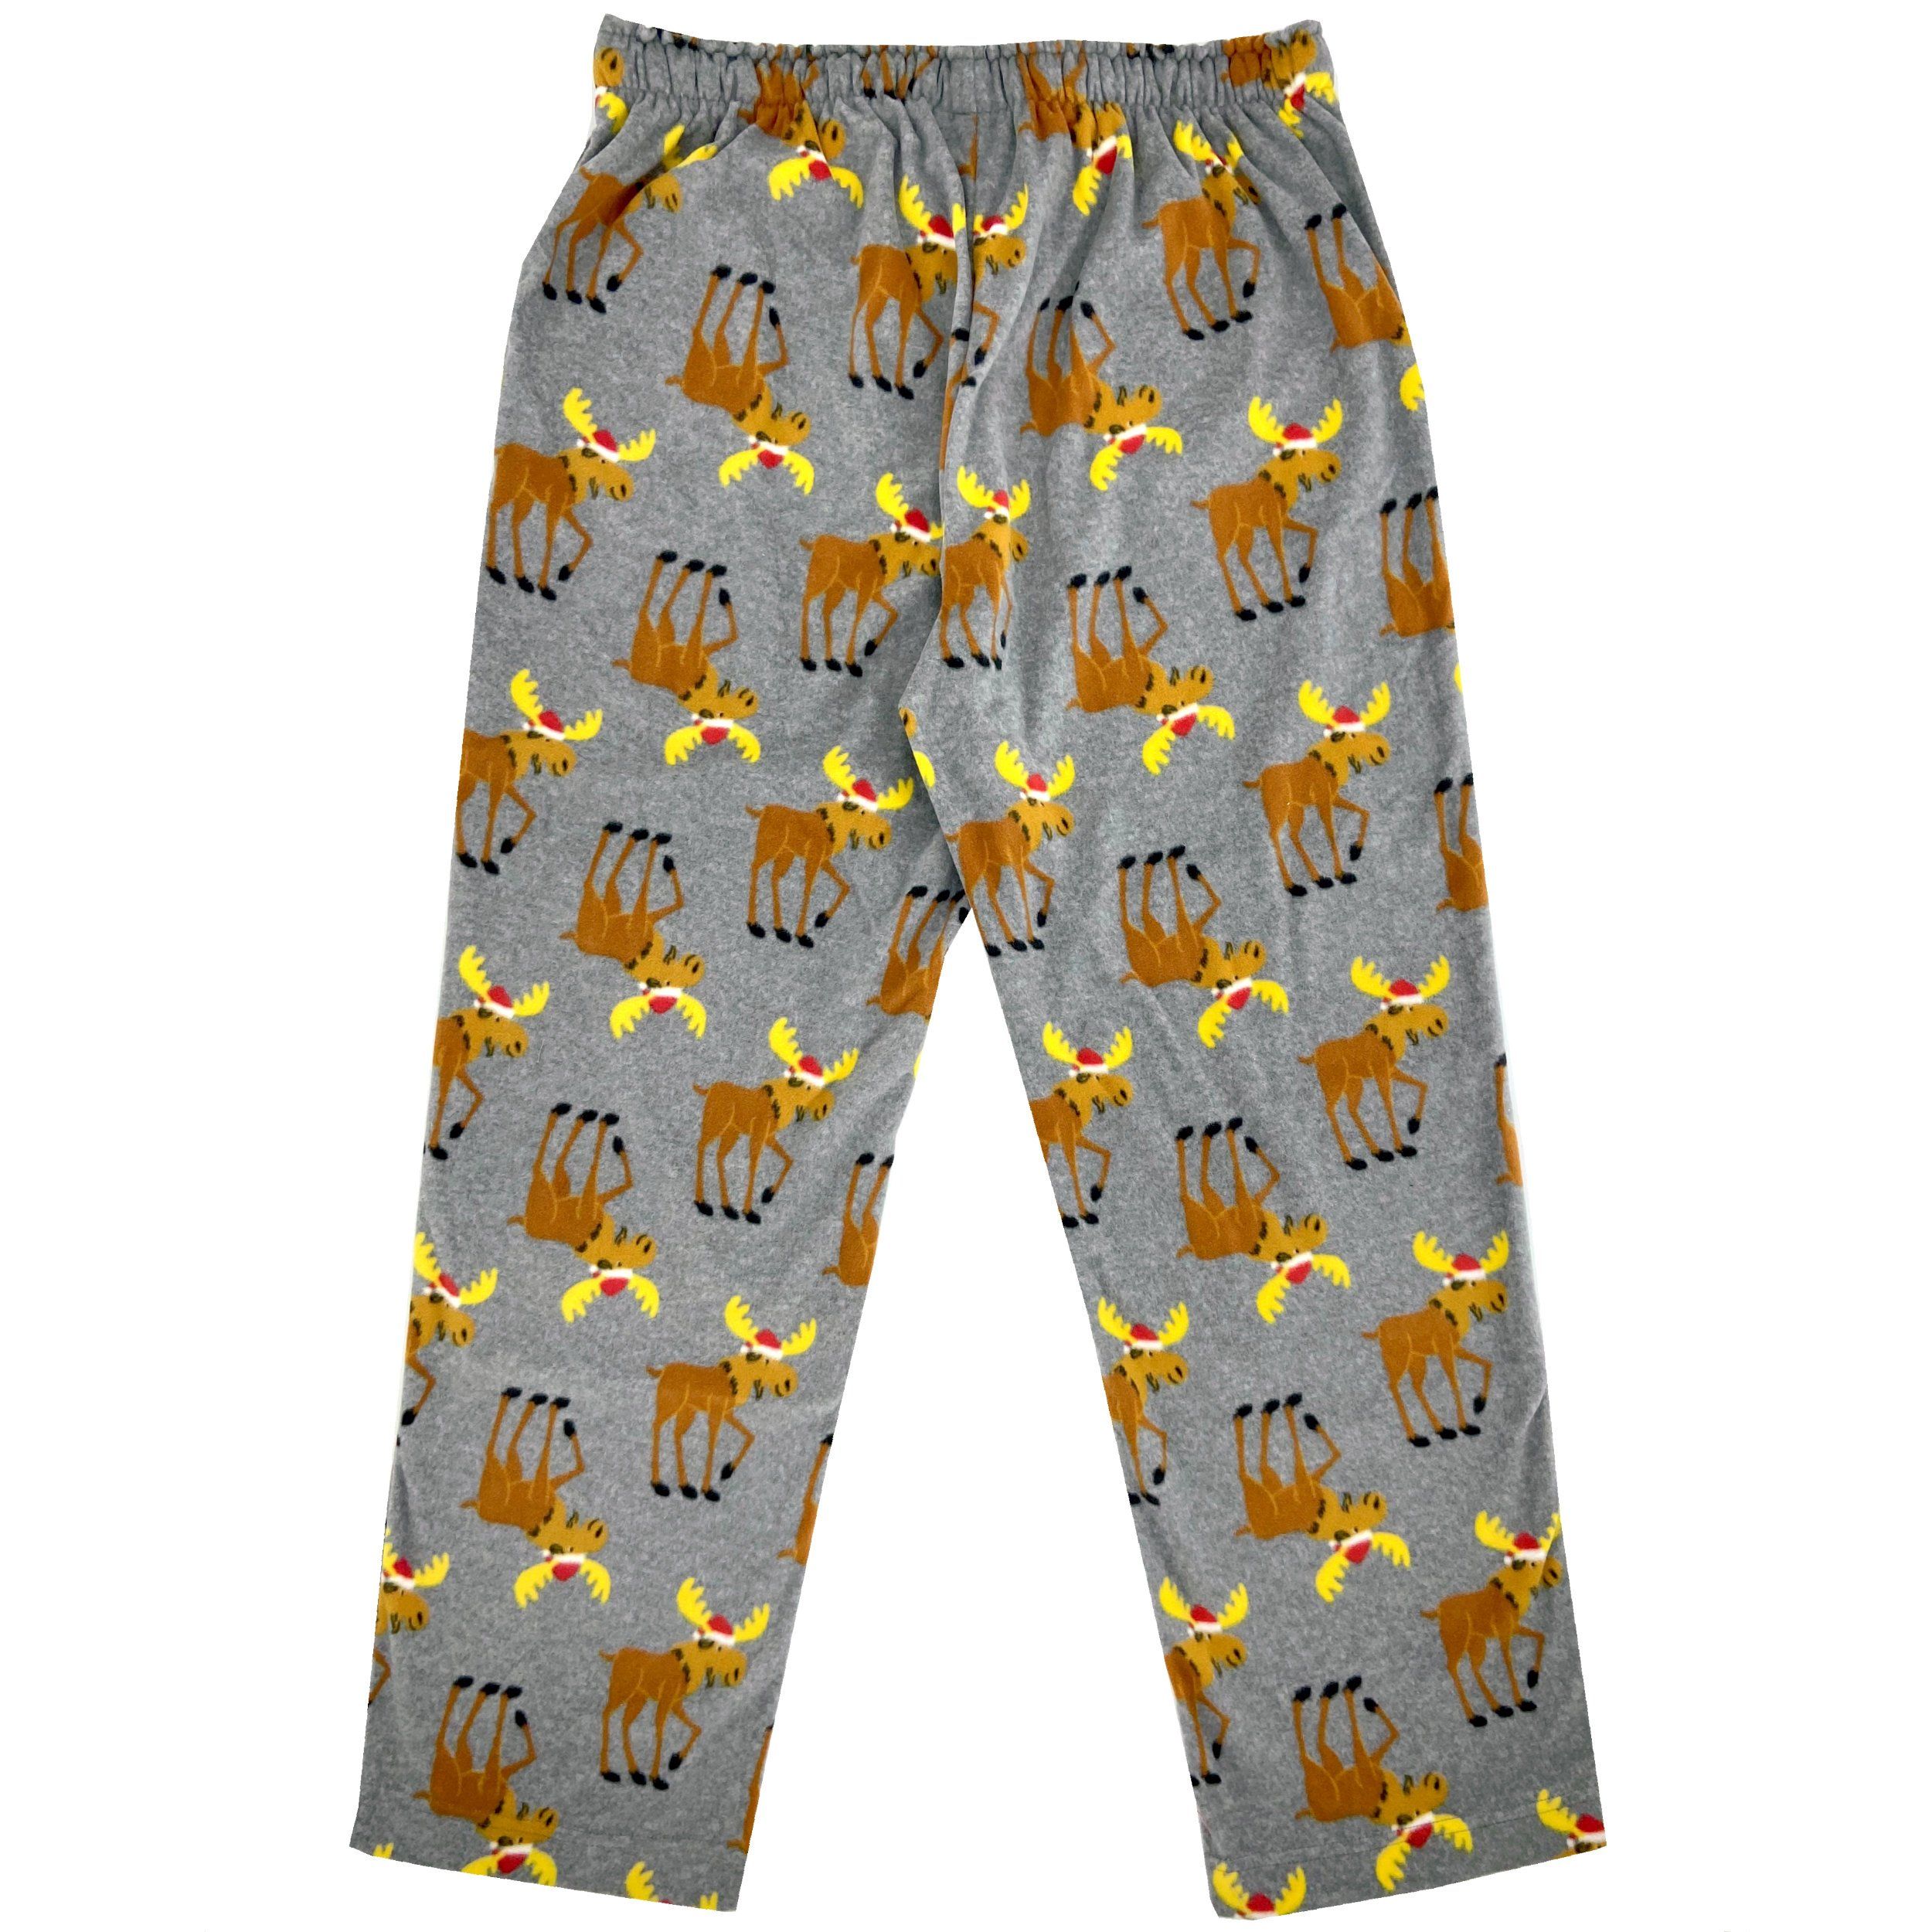 Moose Pajama Pants For Men. Buy Men's Moose Print Lounge Pants Online